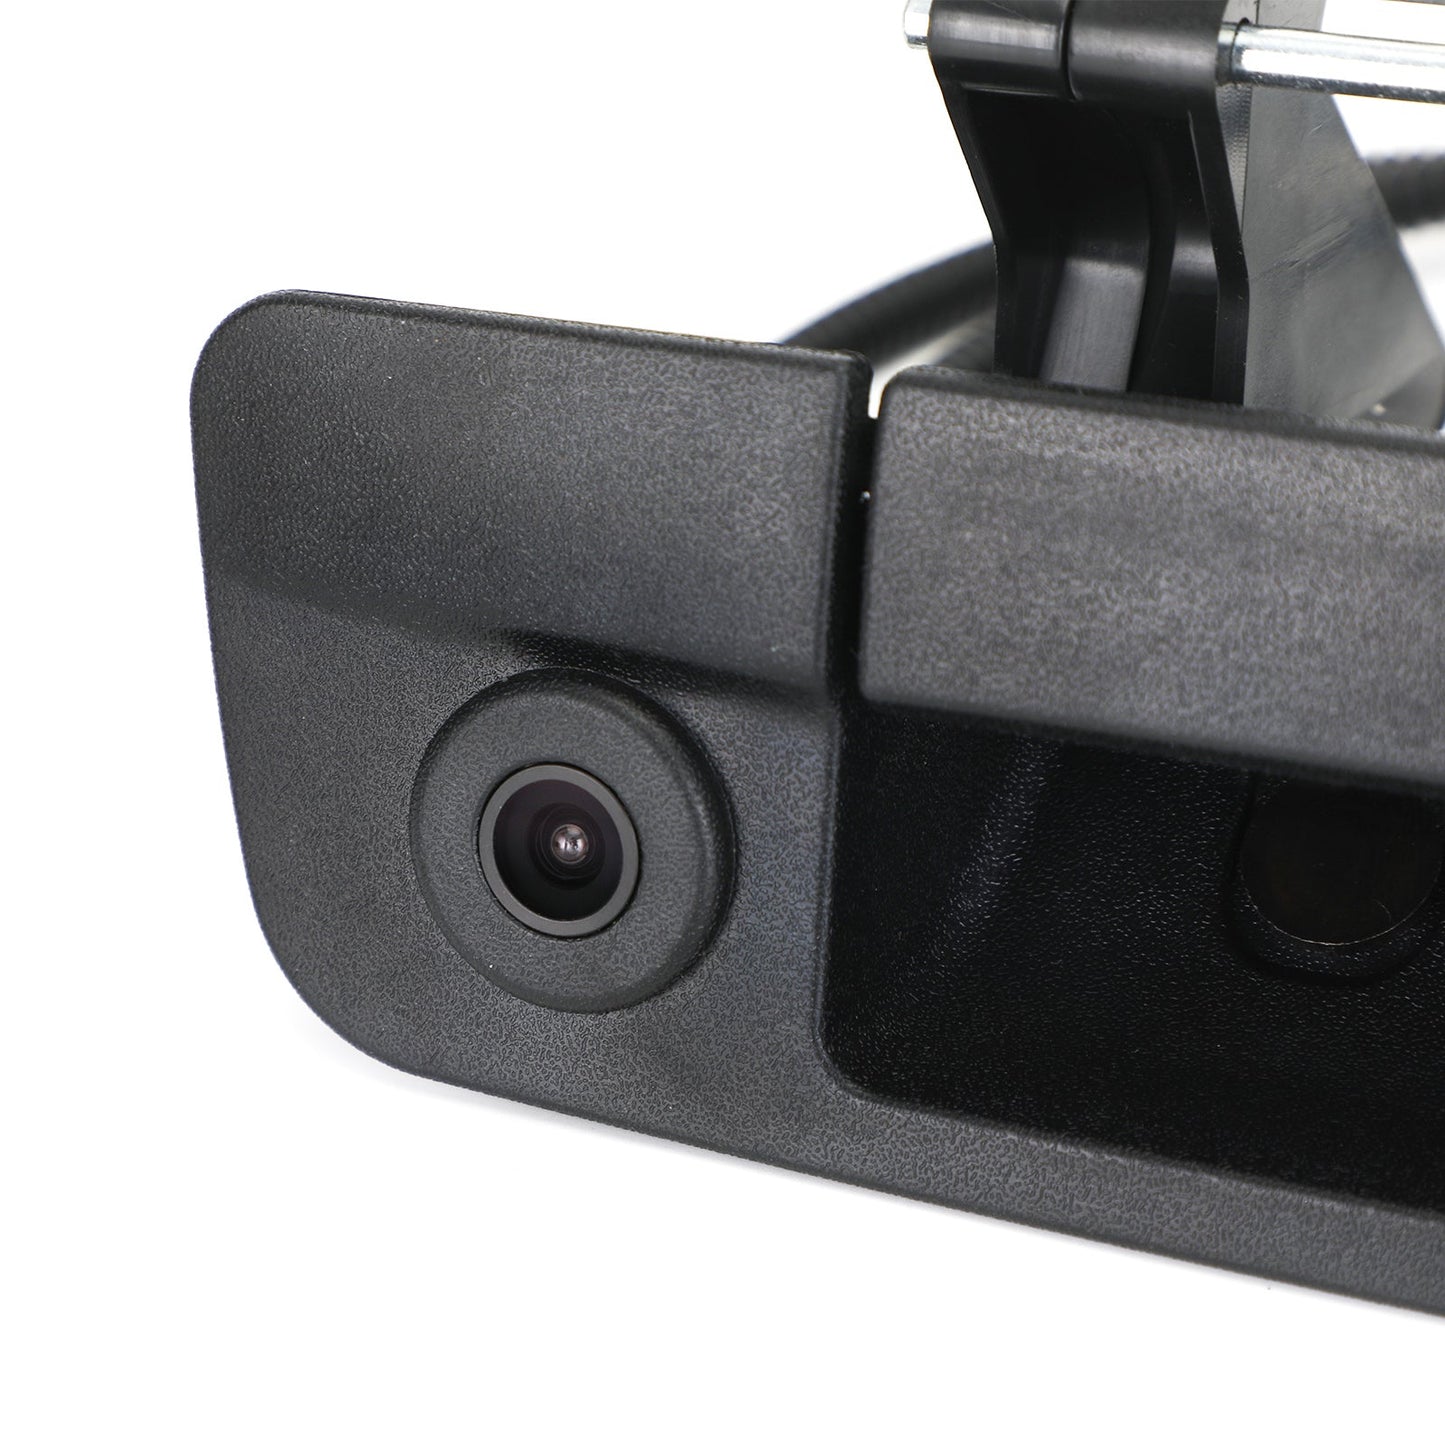 Tailgate Handle Backup Camera For Dodge Ram 1500 2500 3500 2009-2017